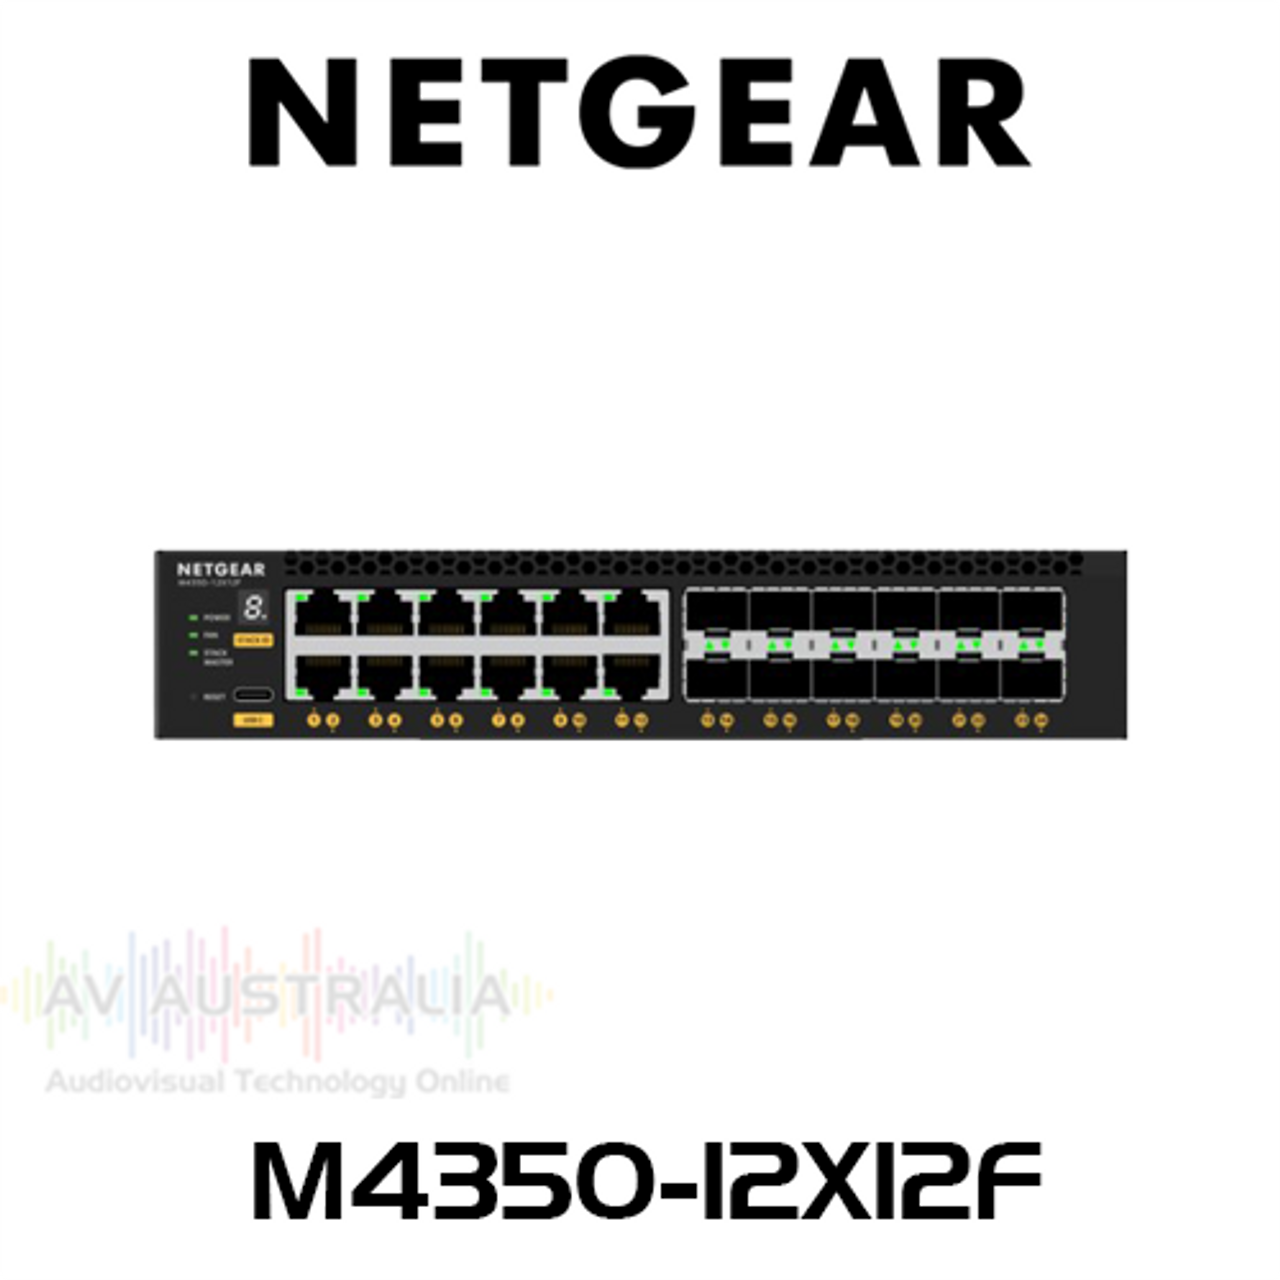 Netgear M4350-12X12F 12x10G/Multi-Gig Layer 3 Managed Switch with 12x10G SFP